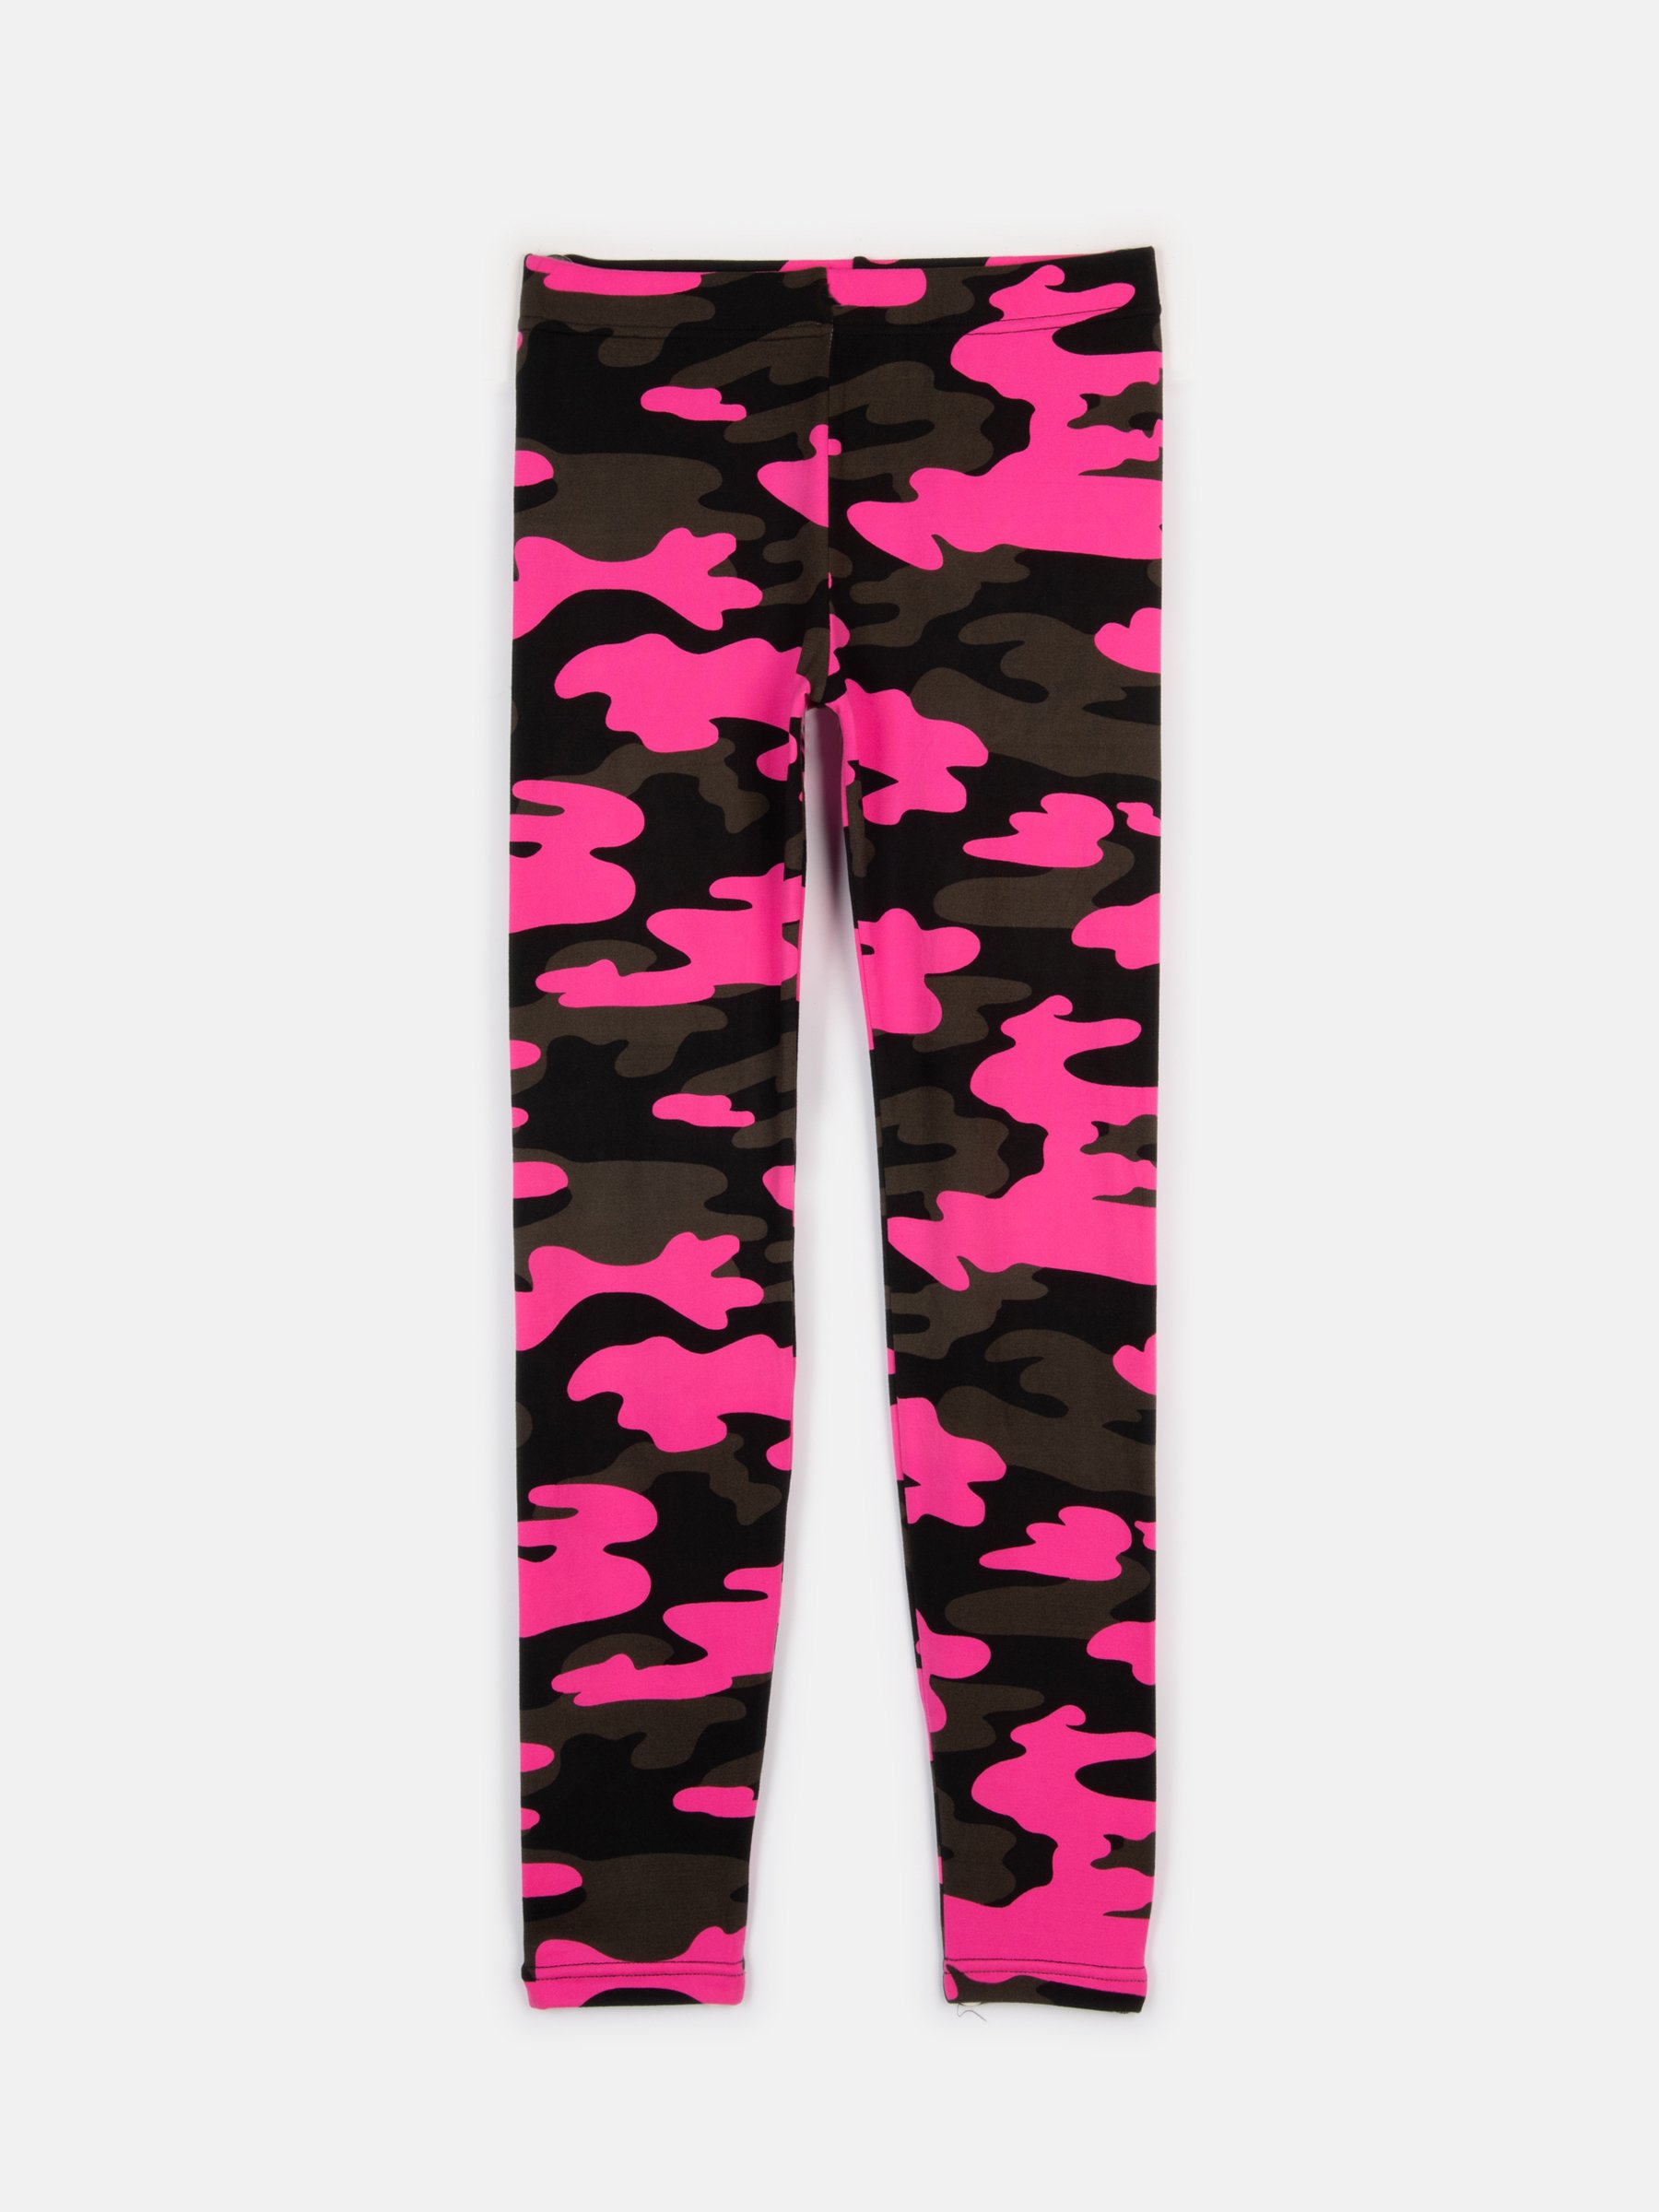 Plus Size Pink Camouflage Leggings